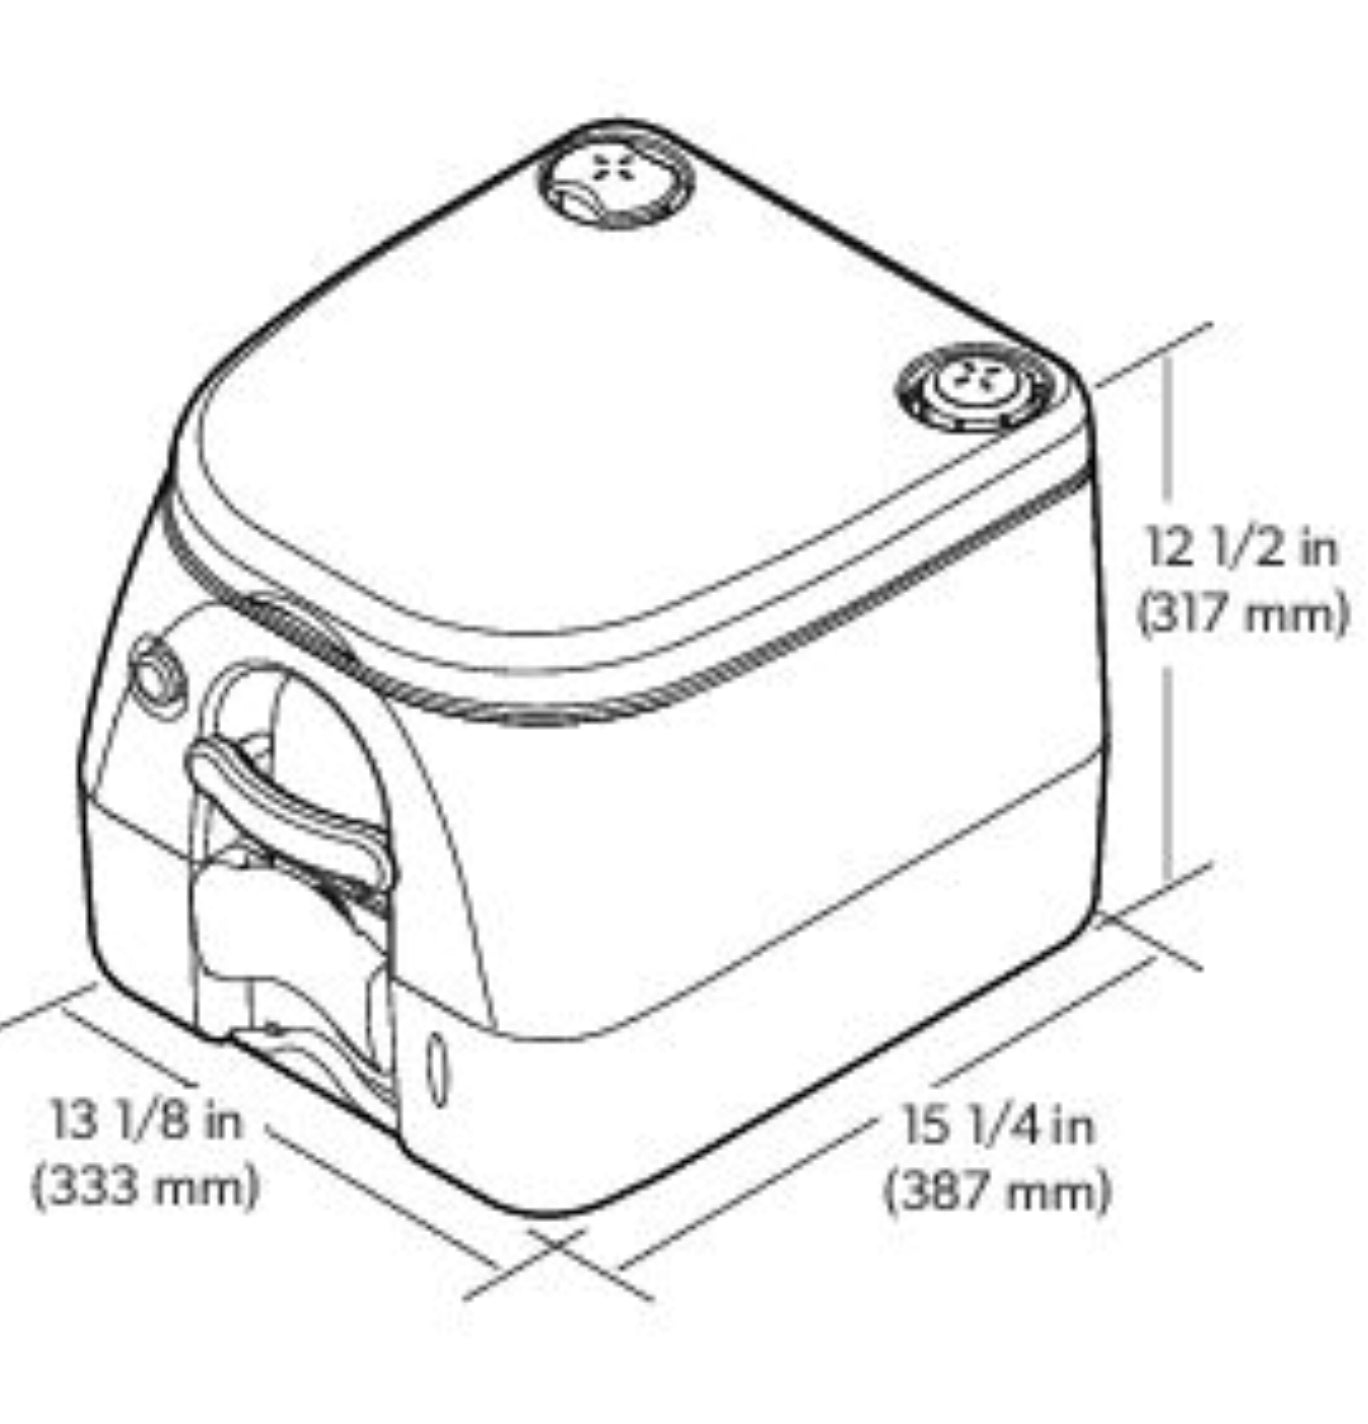 Dometic 972G Portable Toilet & PowerCare Tabs Bundle